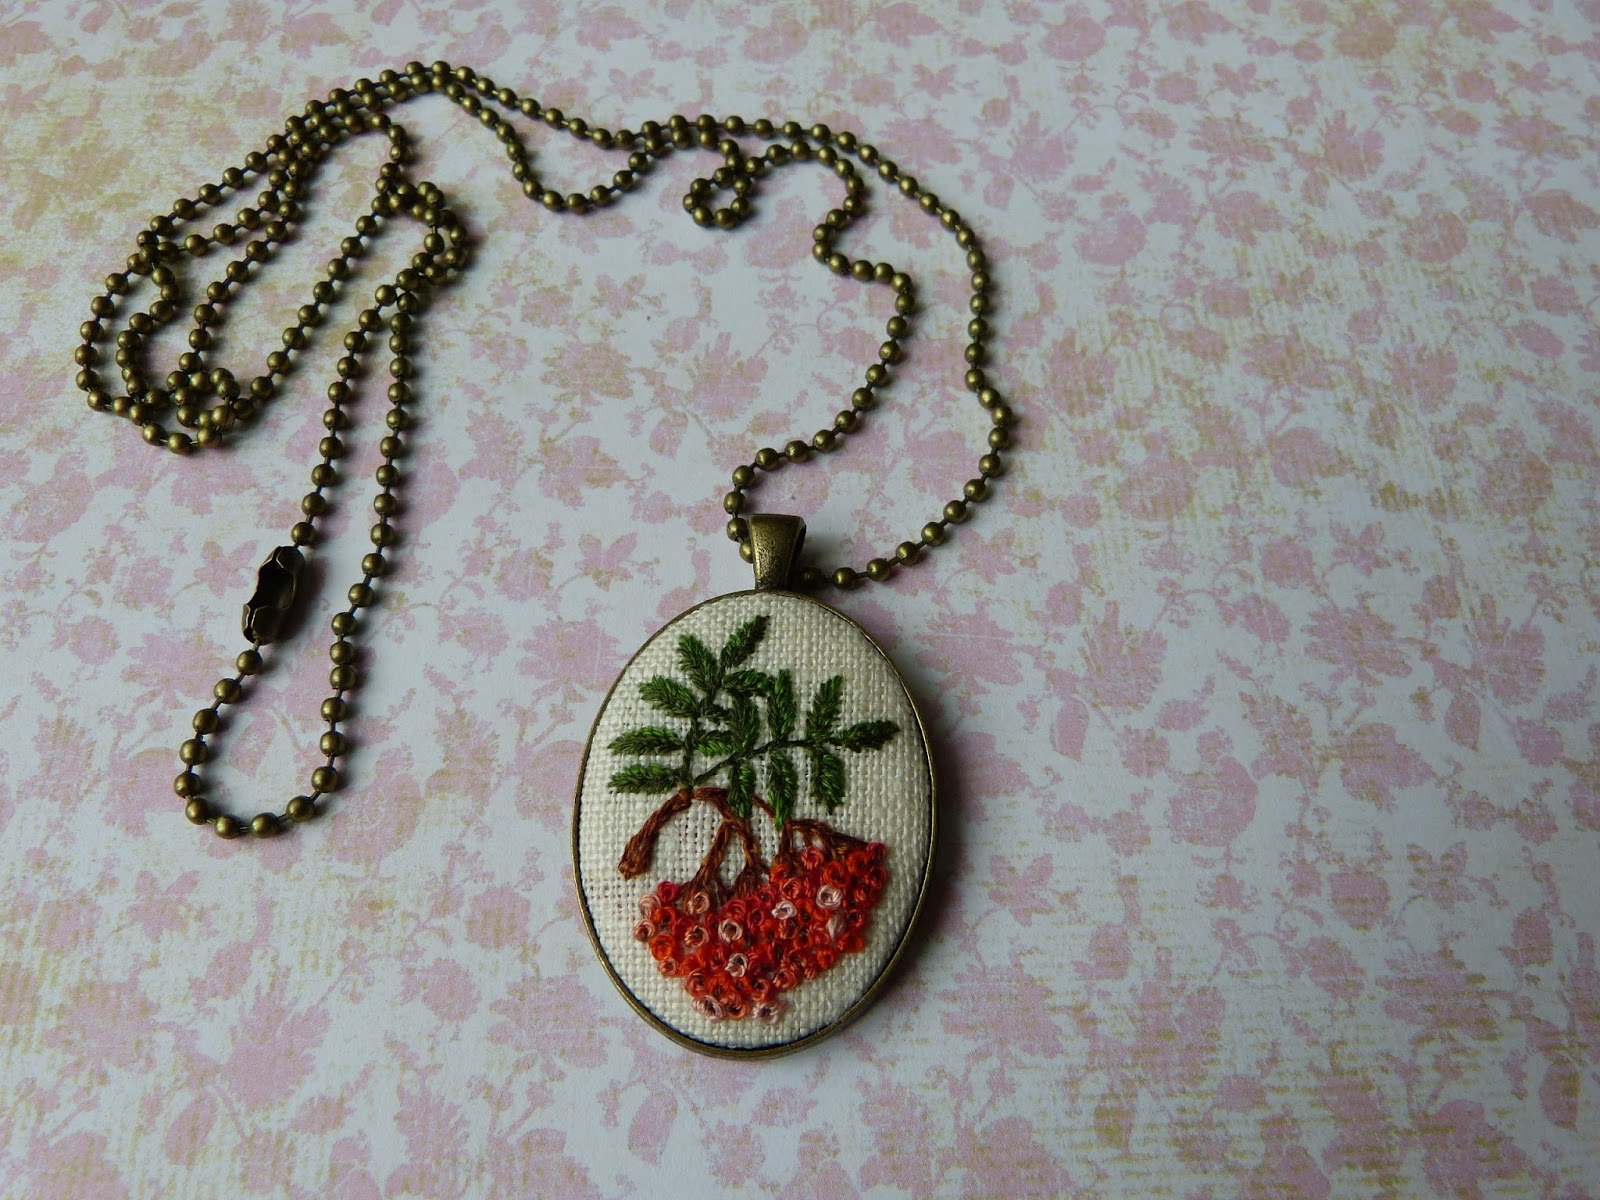 haftowana biżuteria, handmade jewerly, ebbroidered jewerly, broszka z haftem, embroidered pendant, embroidered brooch